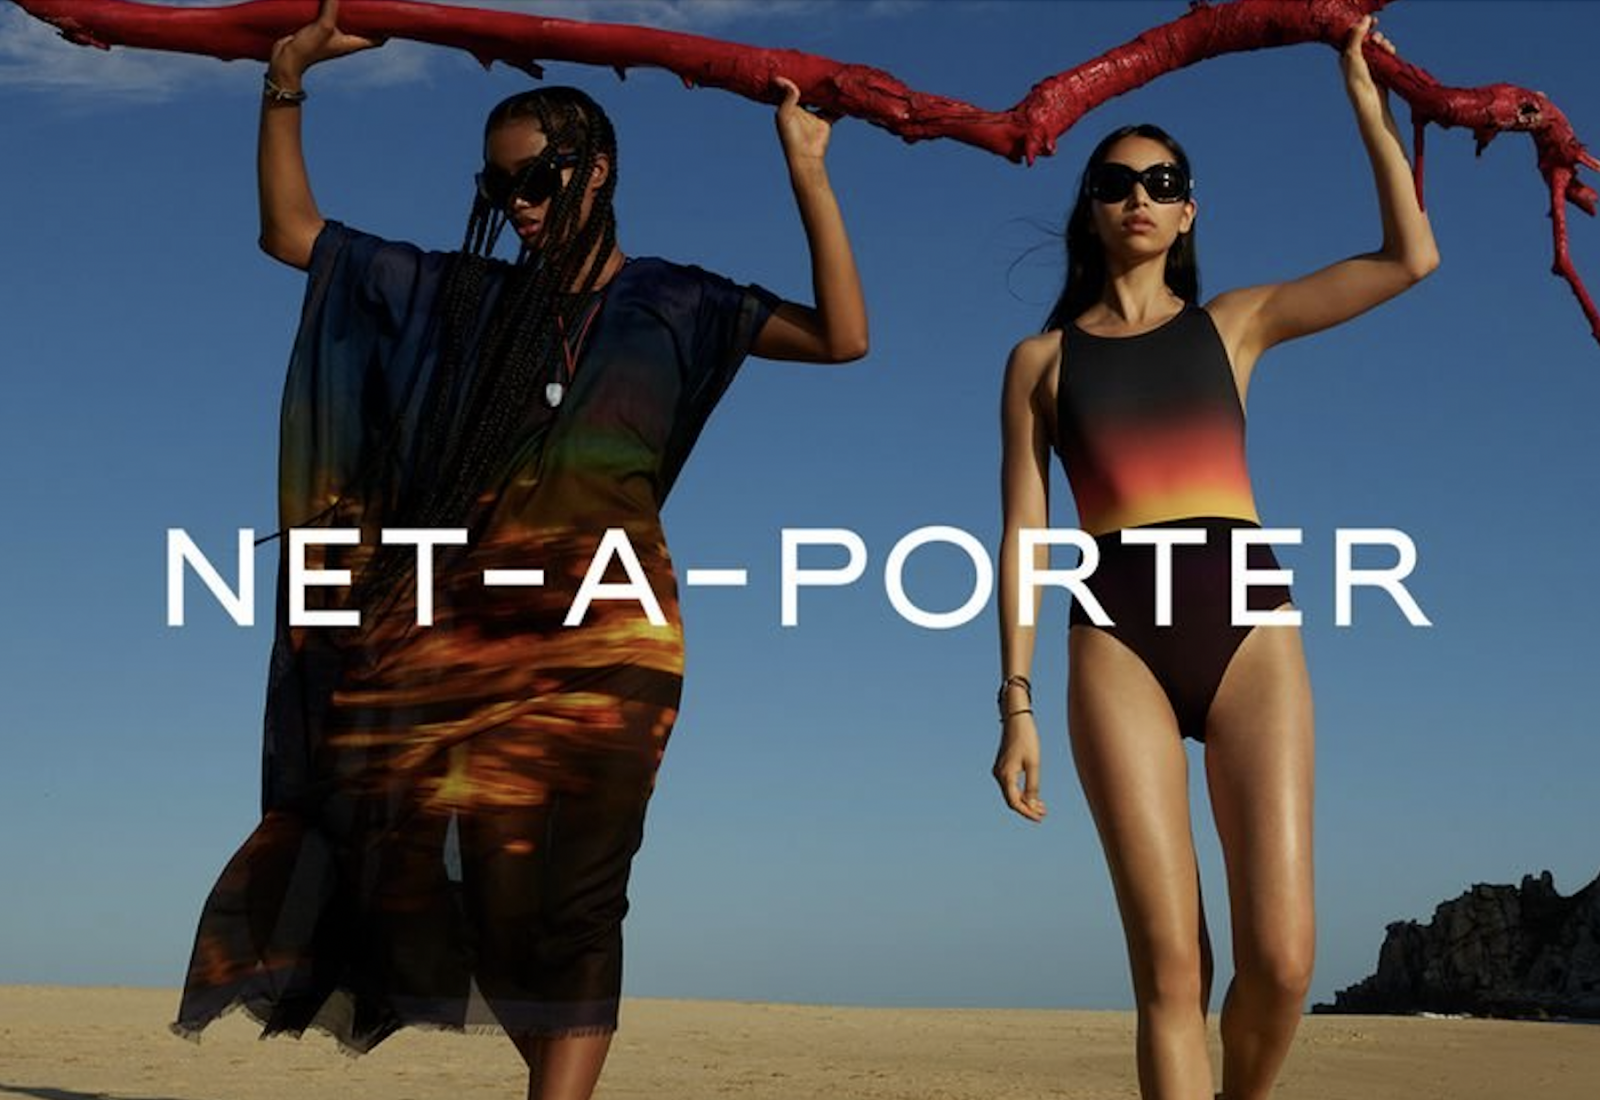 A Net-a-Porter ad